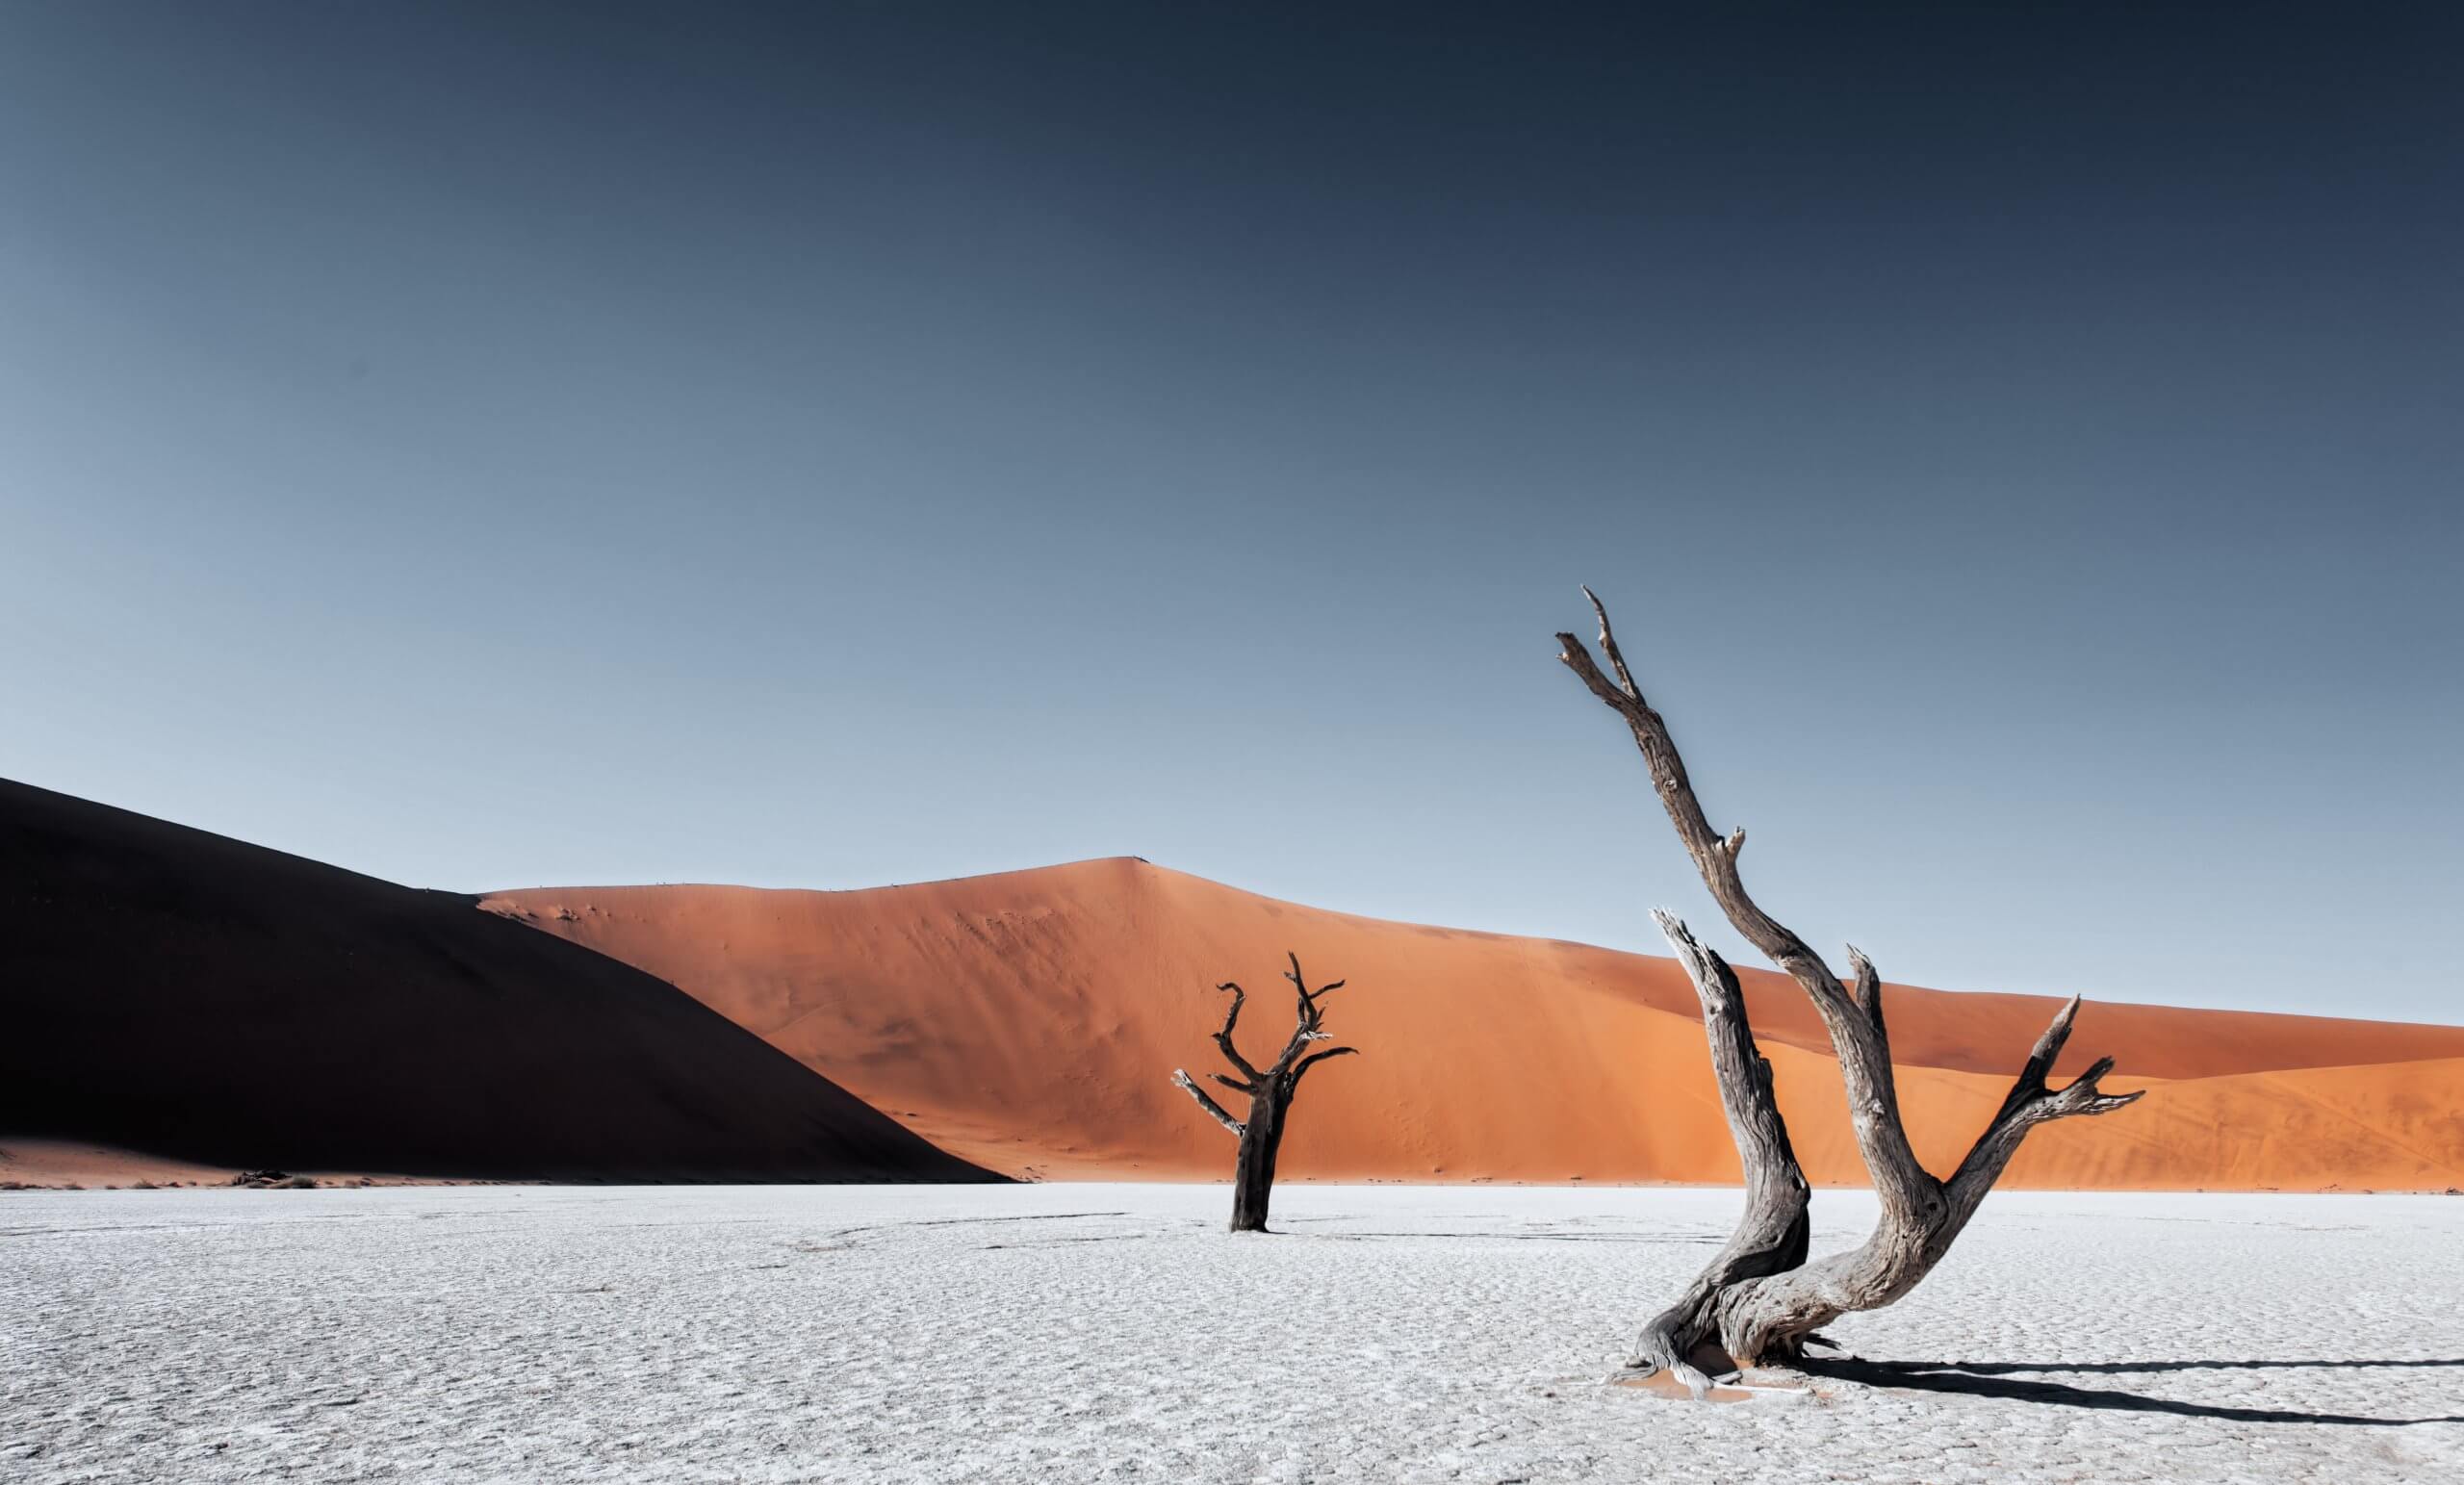 A bare tree in a desert landscape